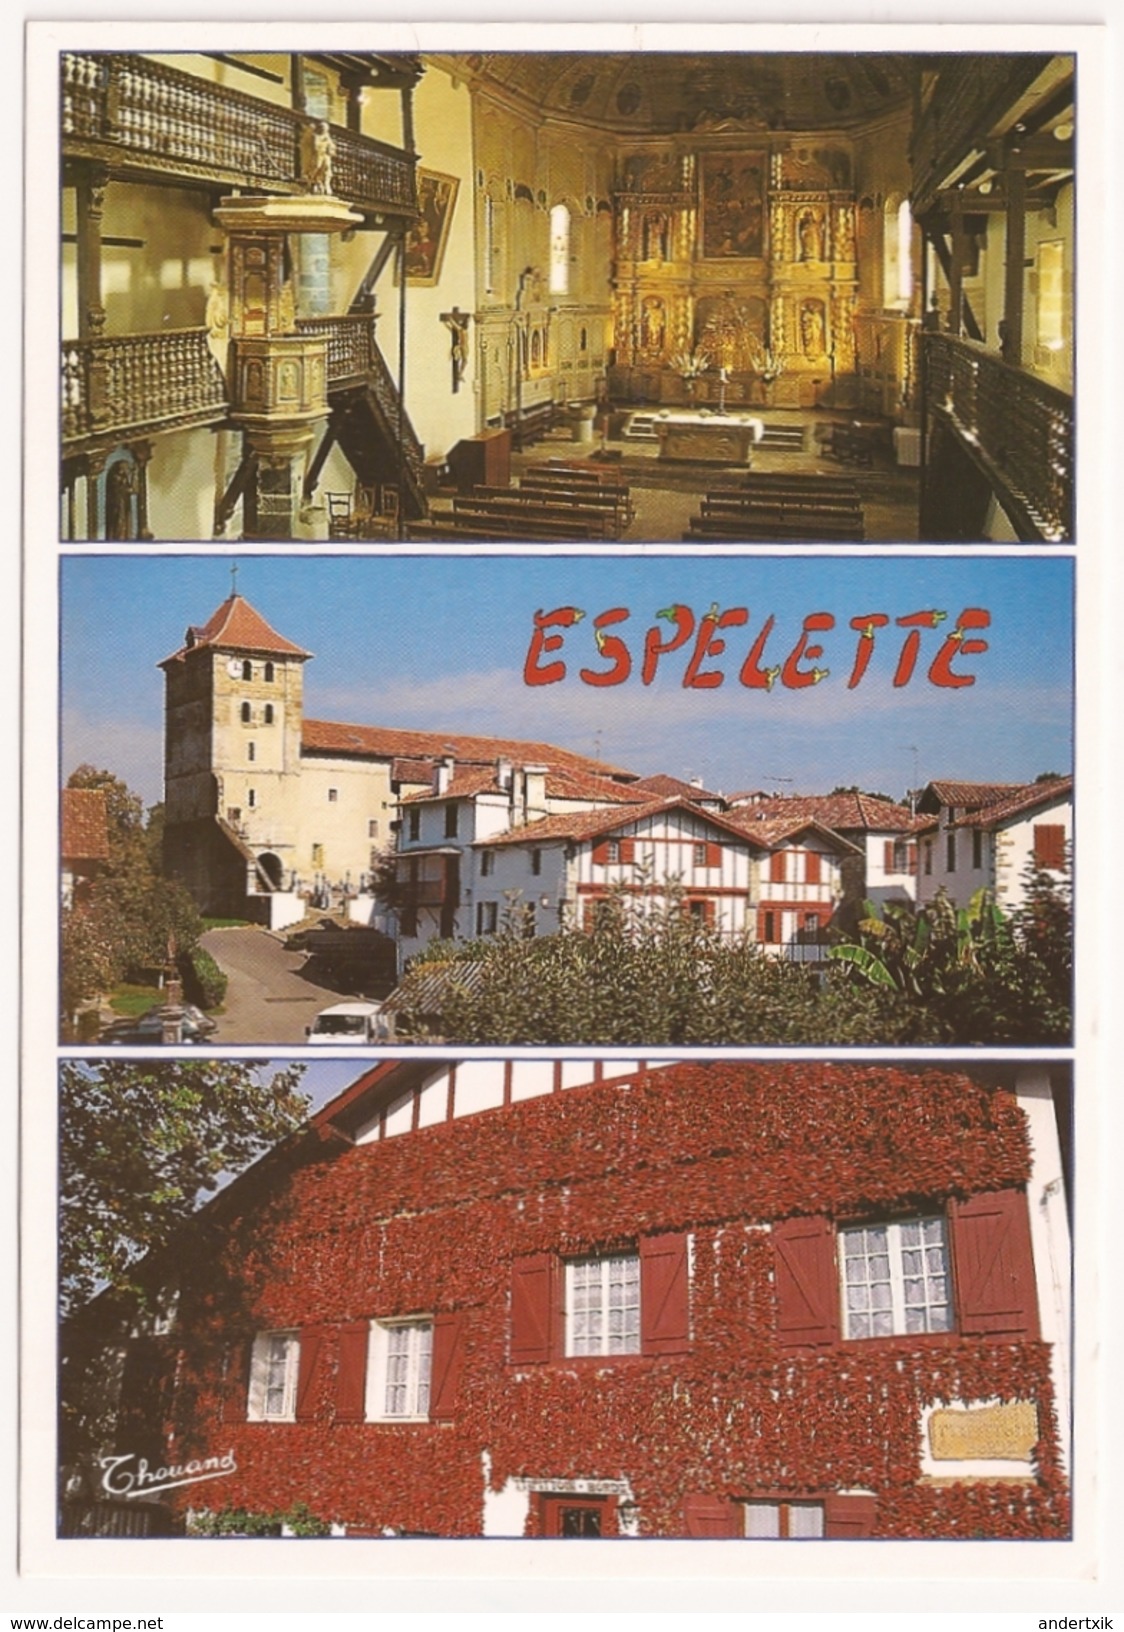 EZPELETTE Postcard - Espelette